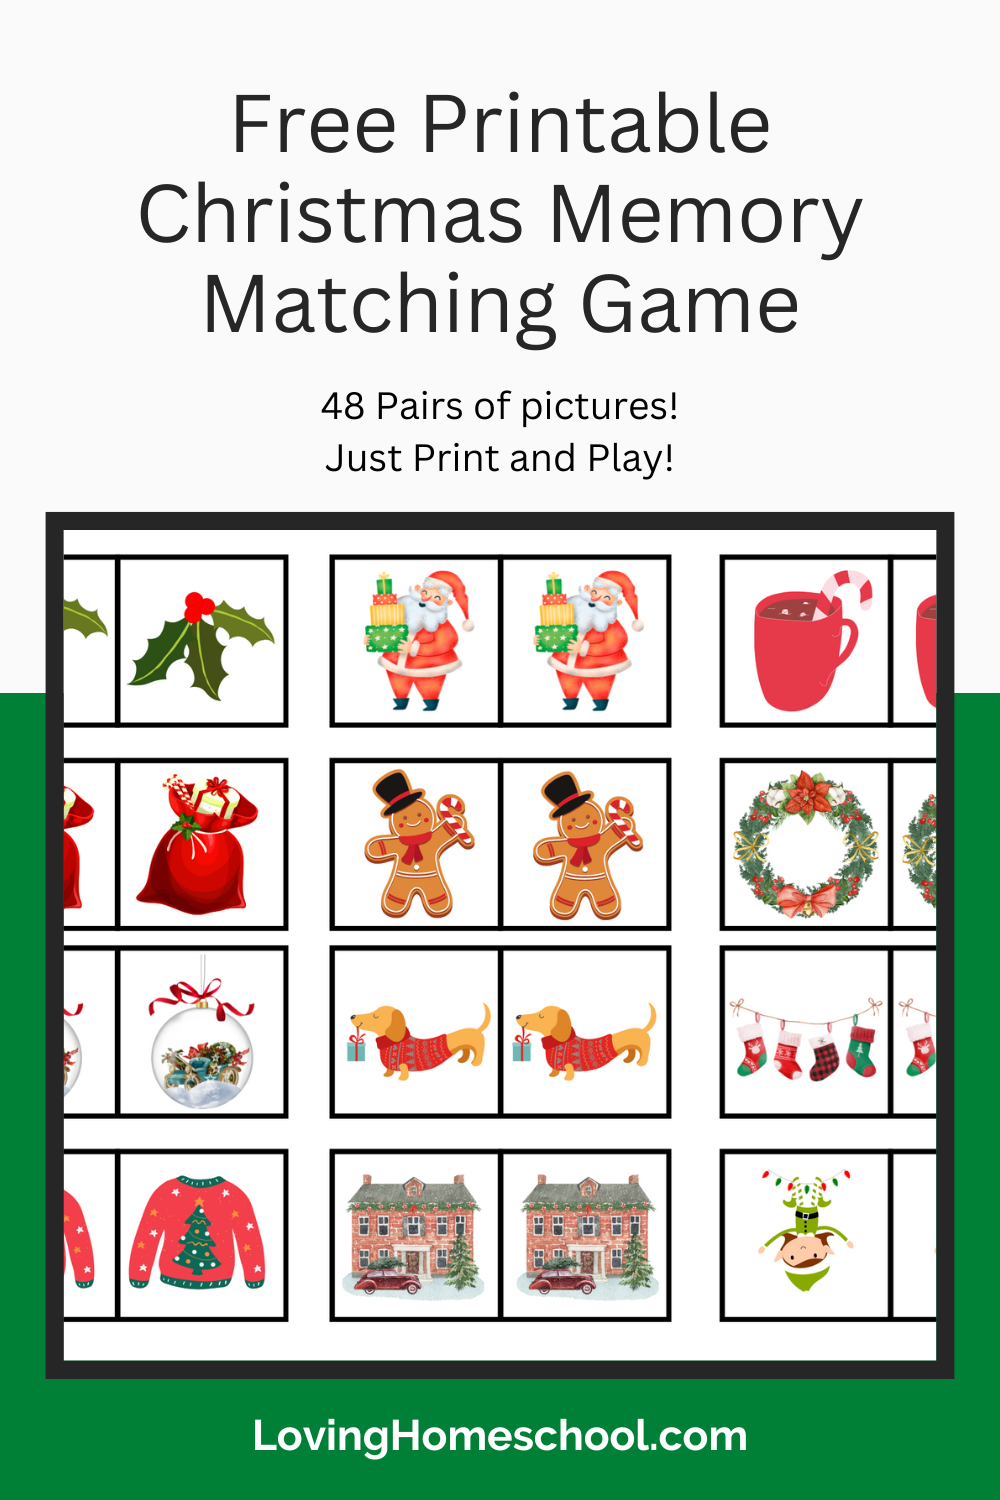 Free Printable Christmas Memory Matching Game Pinterest Pin